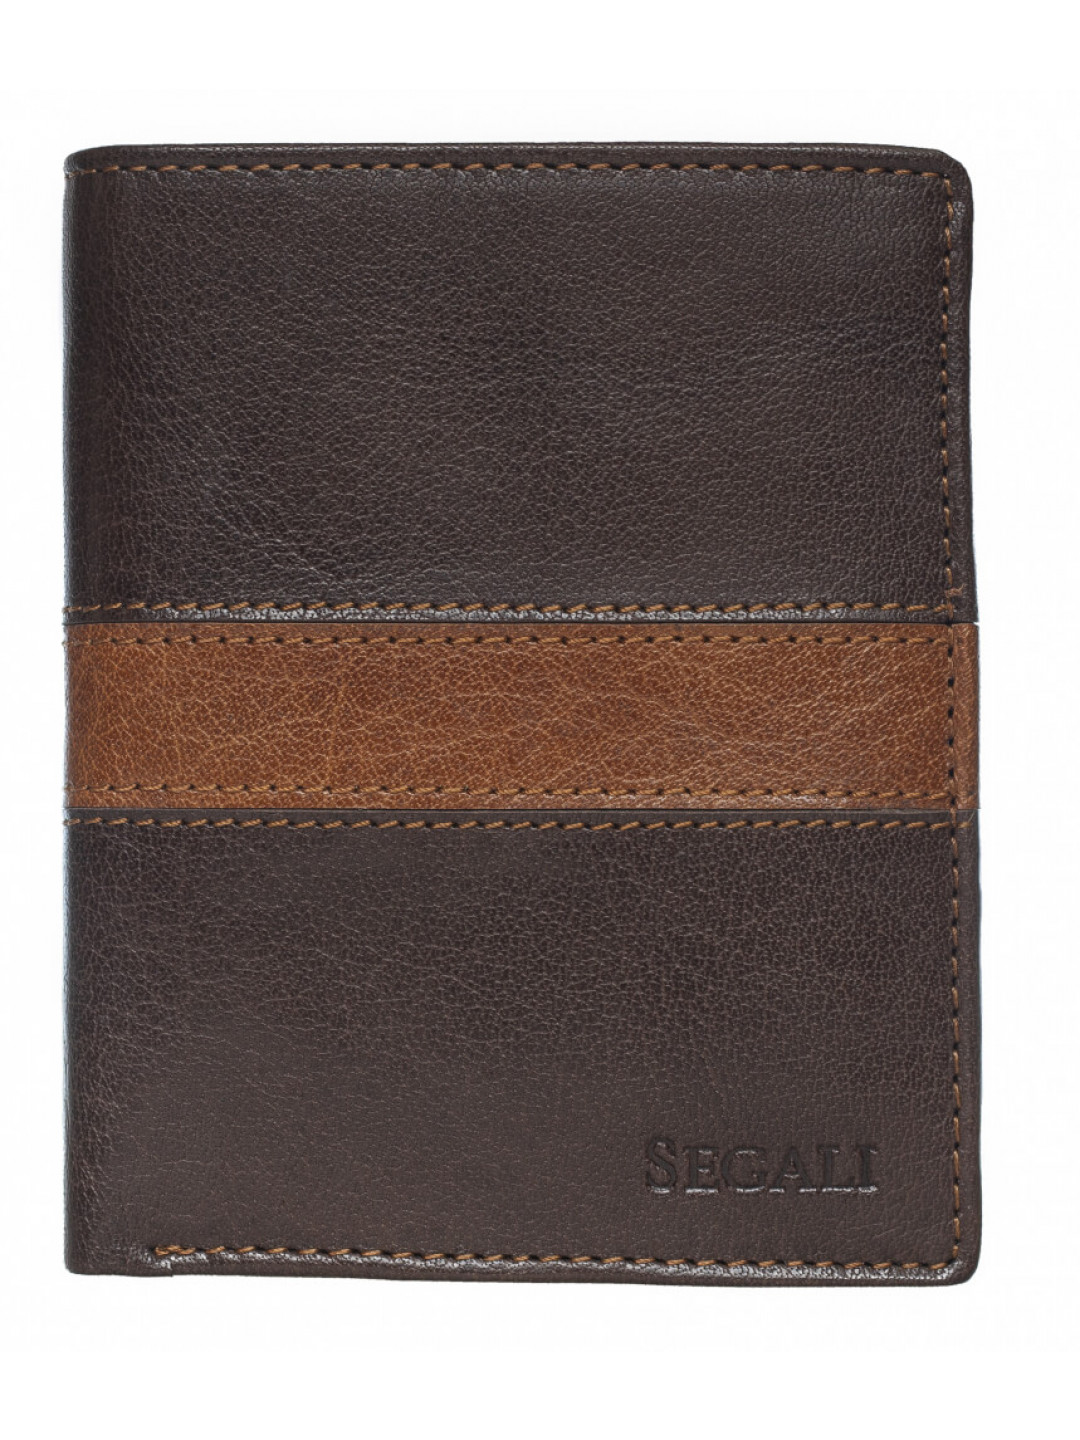 SEGALI Pánská kožená peněženka 81095 brown tan